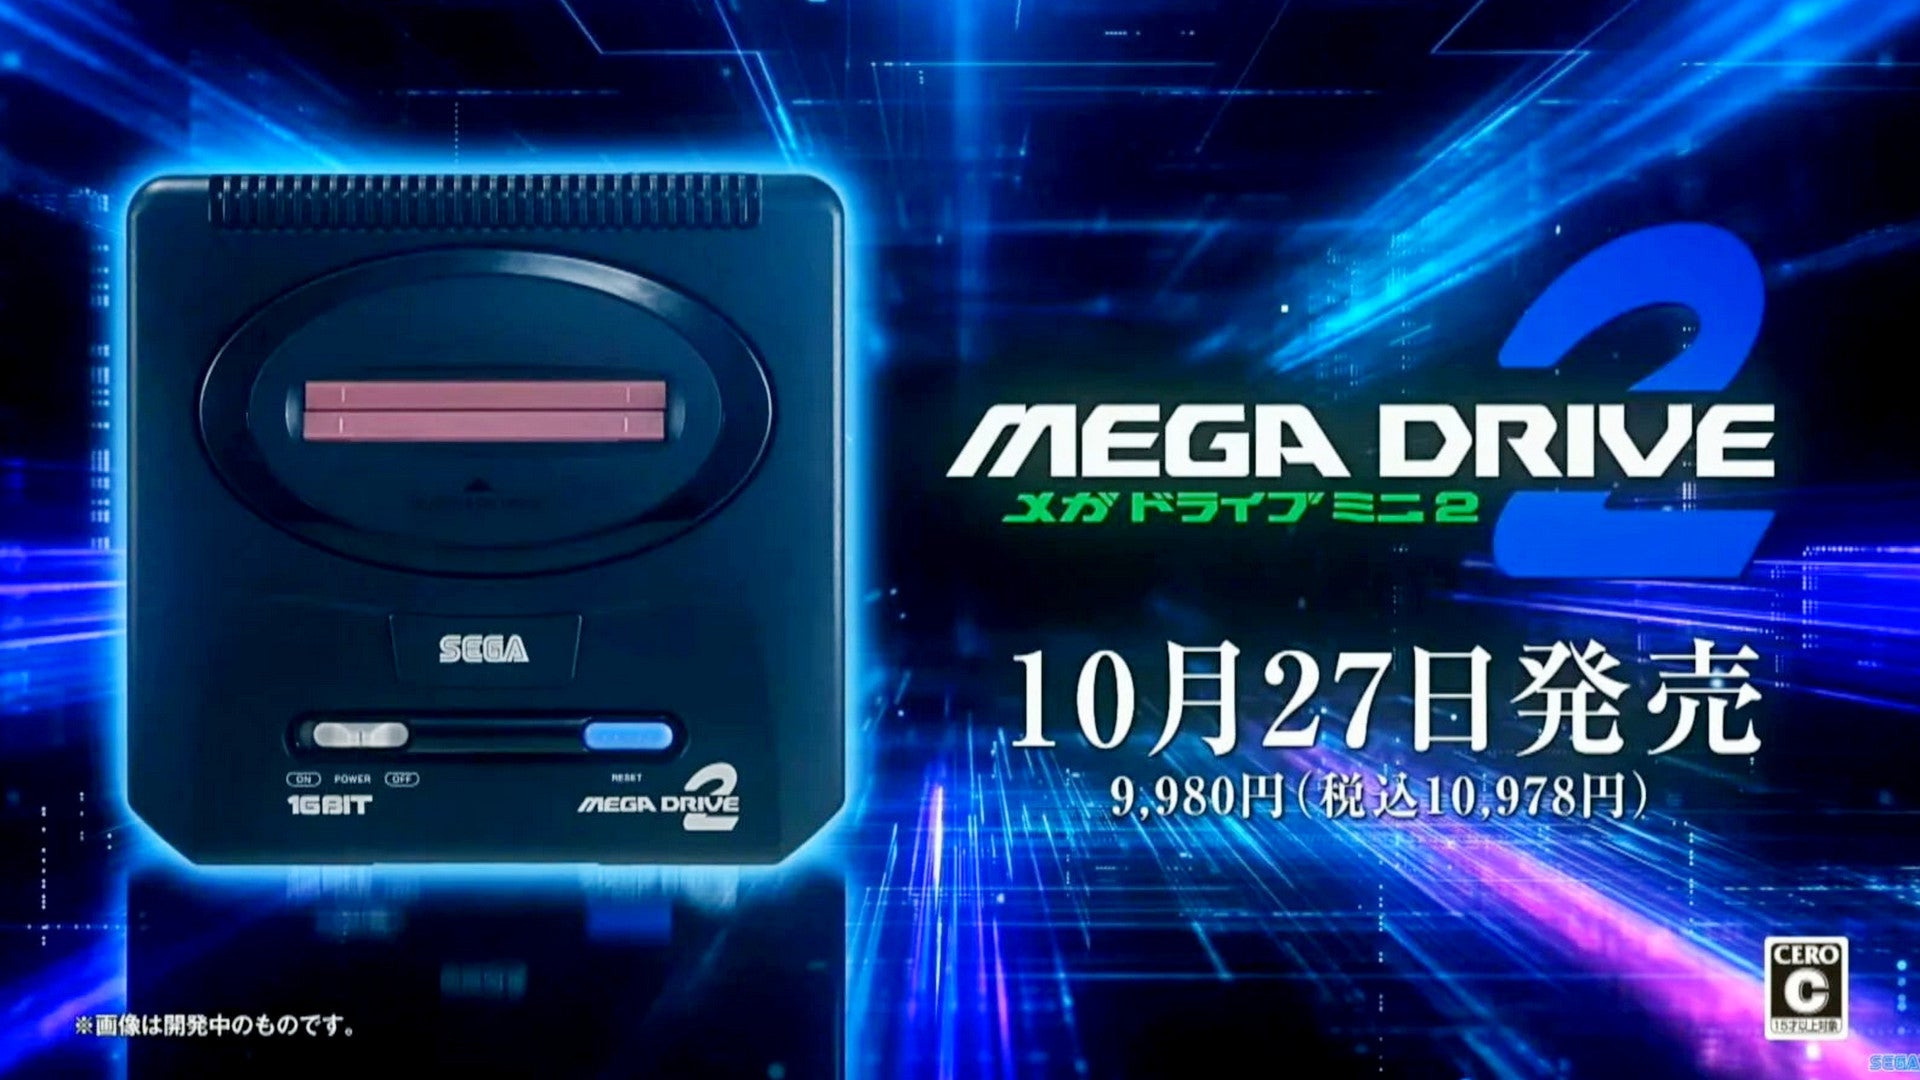 Bilder zu Mega Drive Mini 2: Sega bestätigt weitere Spiele